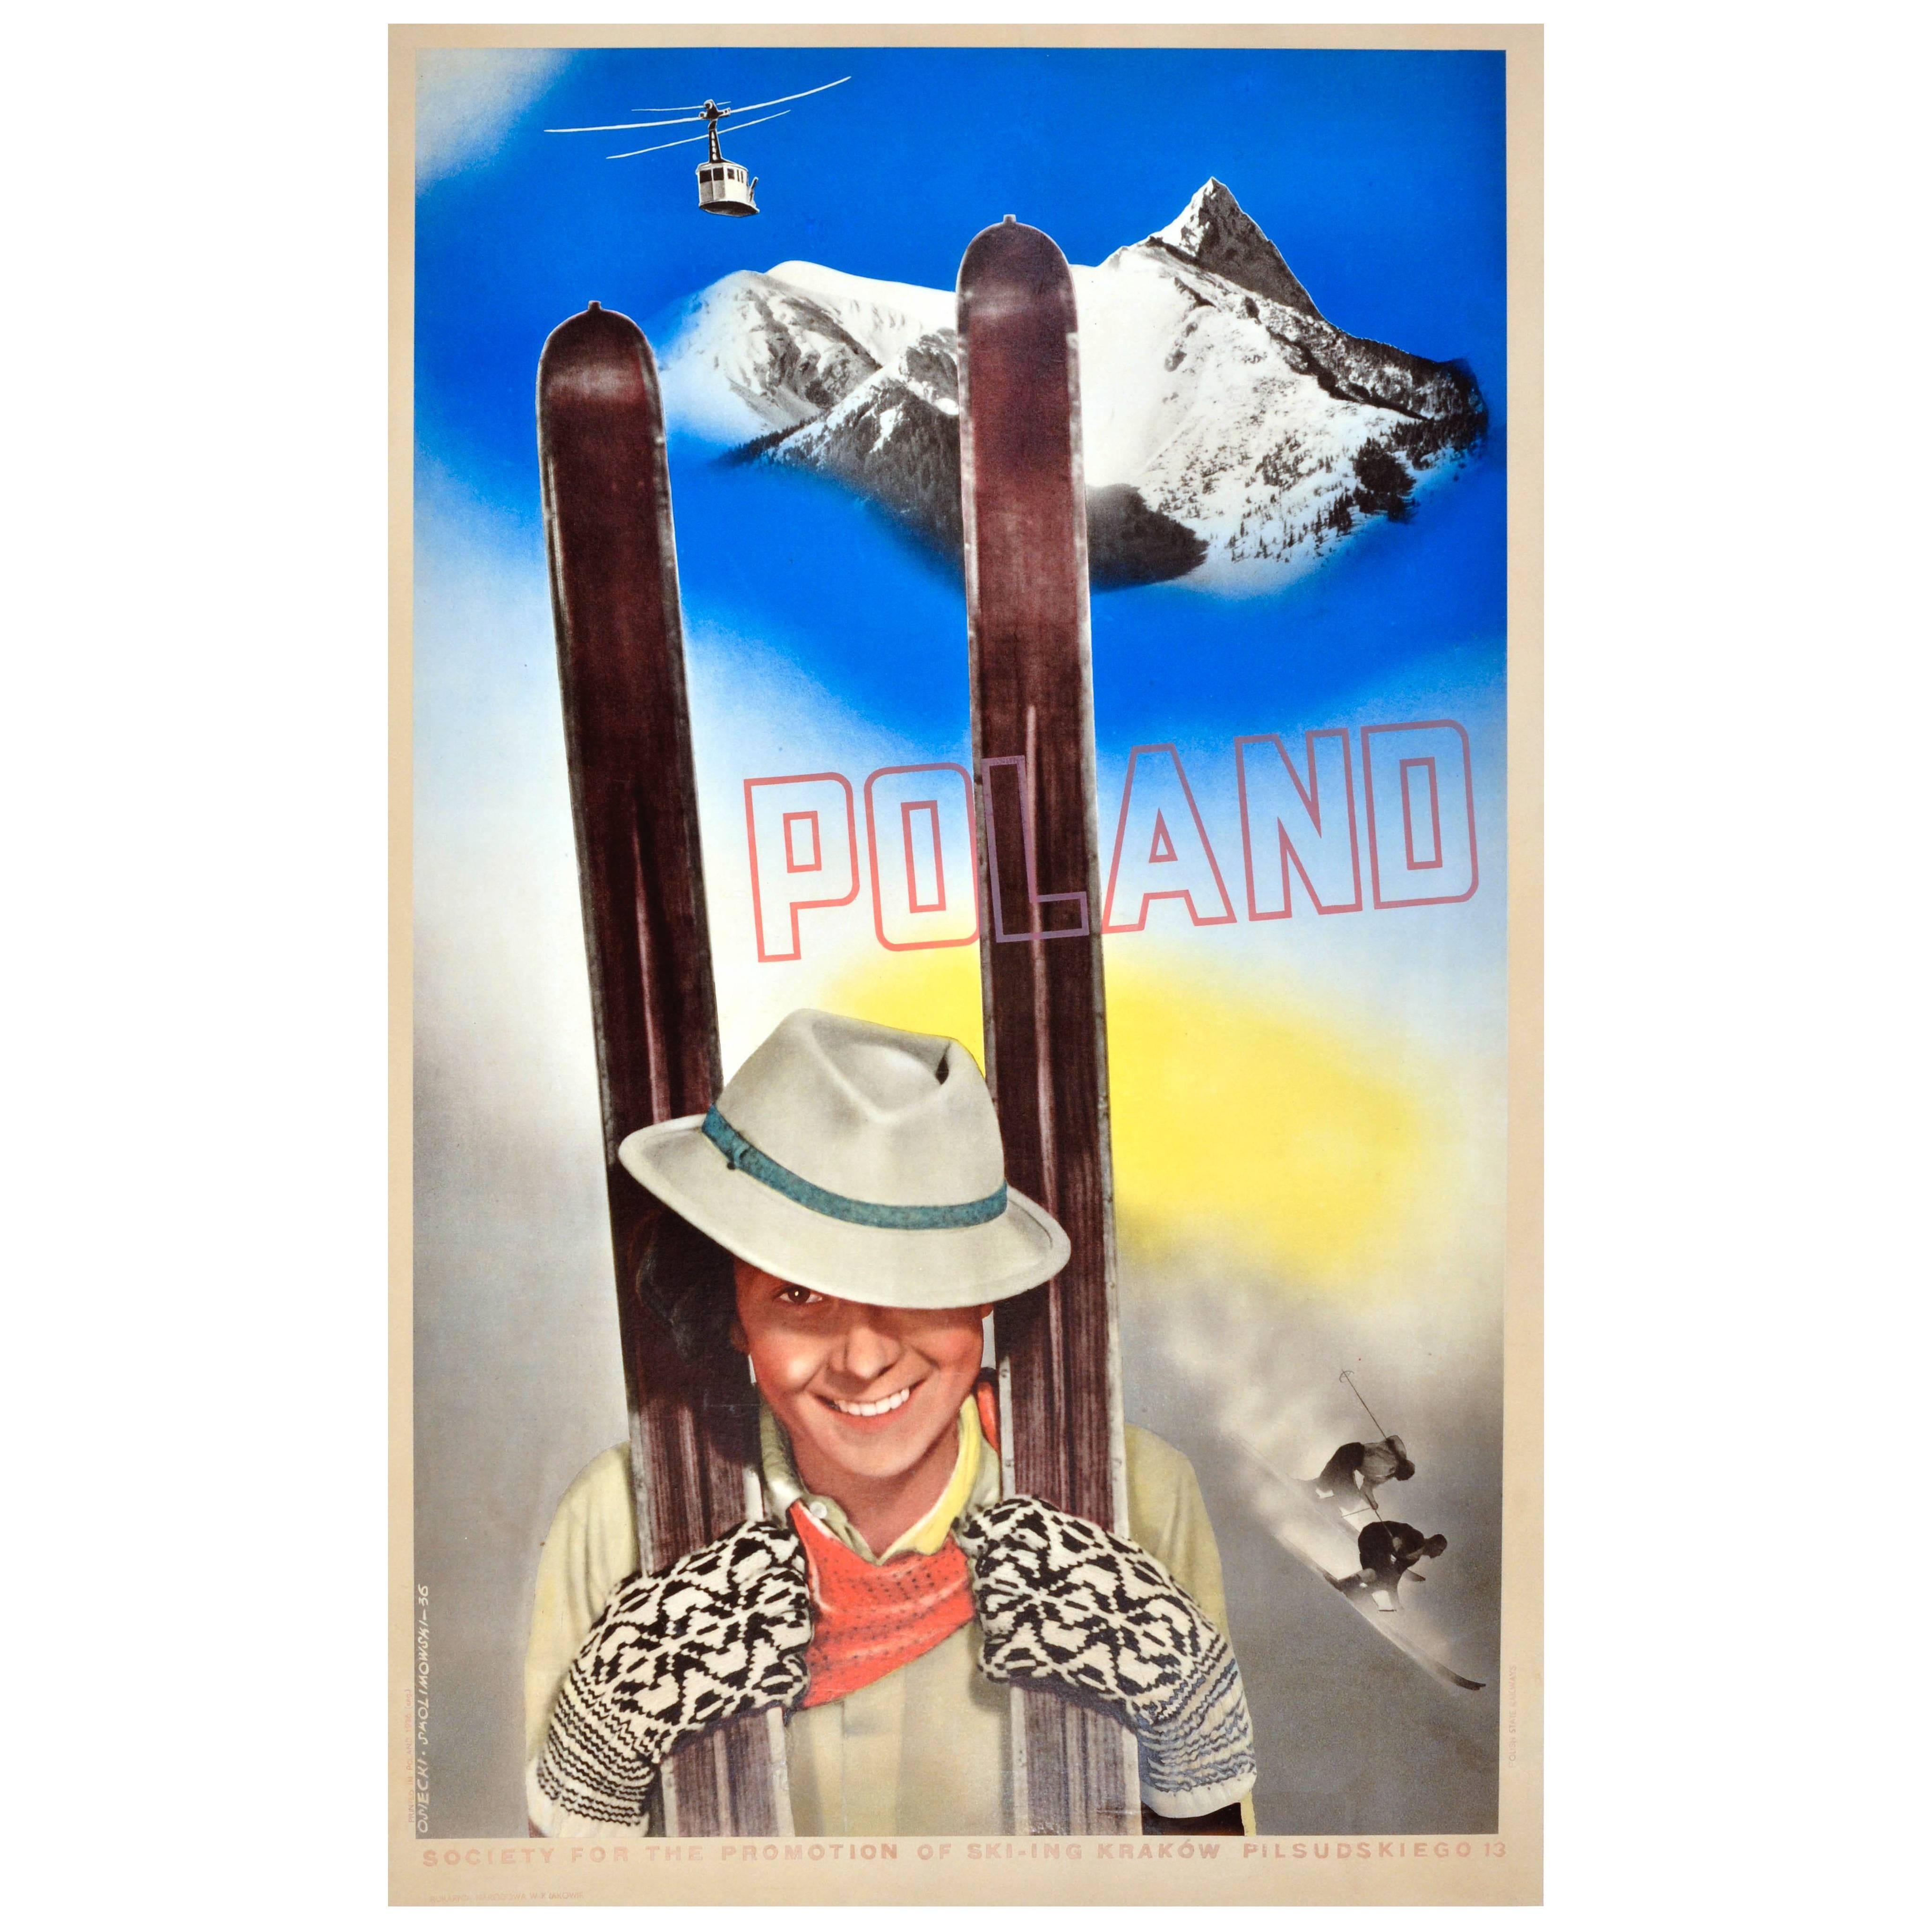 Rare Original Vintage Polish Skiing Poster by Osiecki & Skolimo "Ski in Poland"